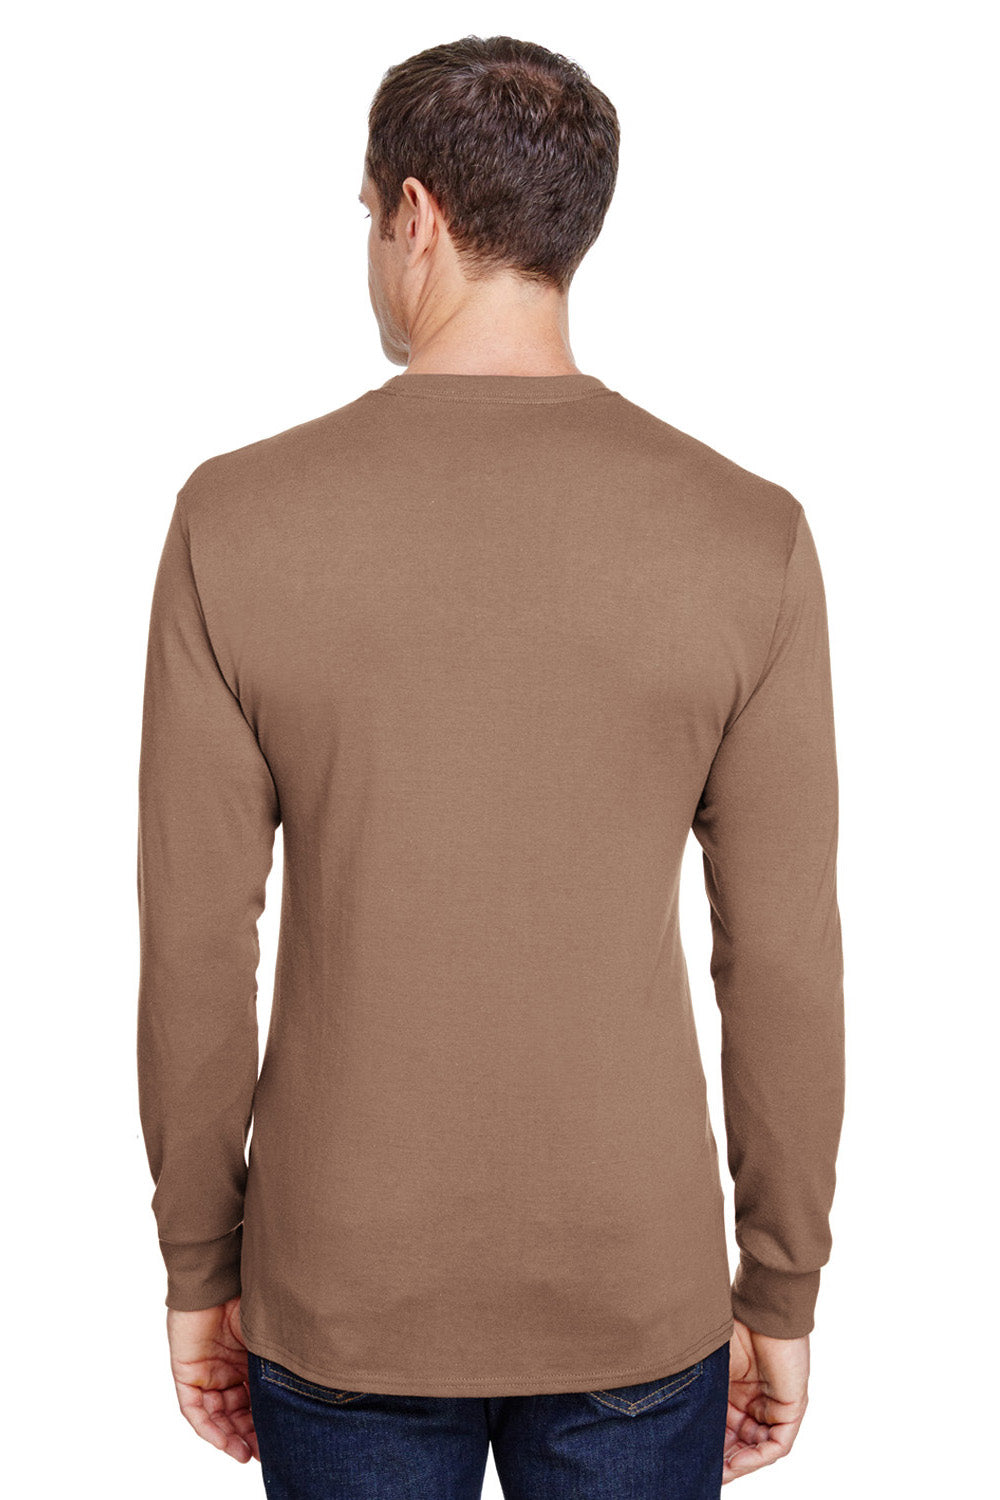 Hanes W120 Mens Workwear Long Sleeve Crewneck T-Shirt w/ Pocket Army Brown Back